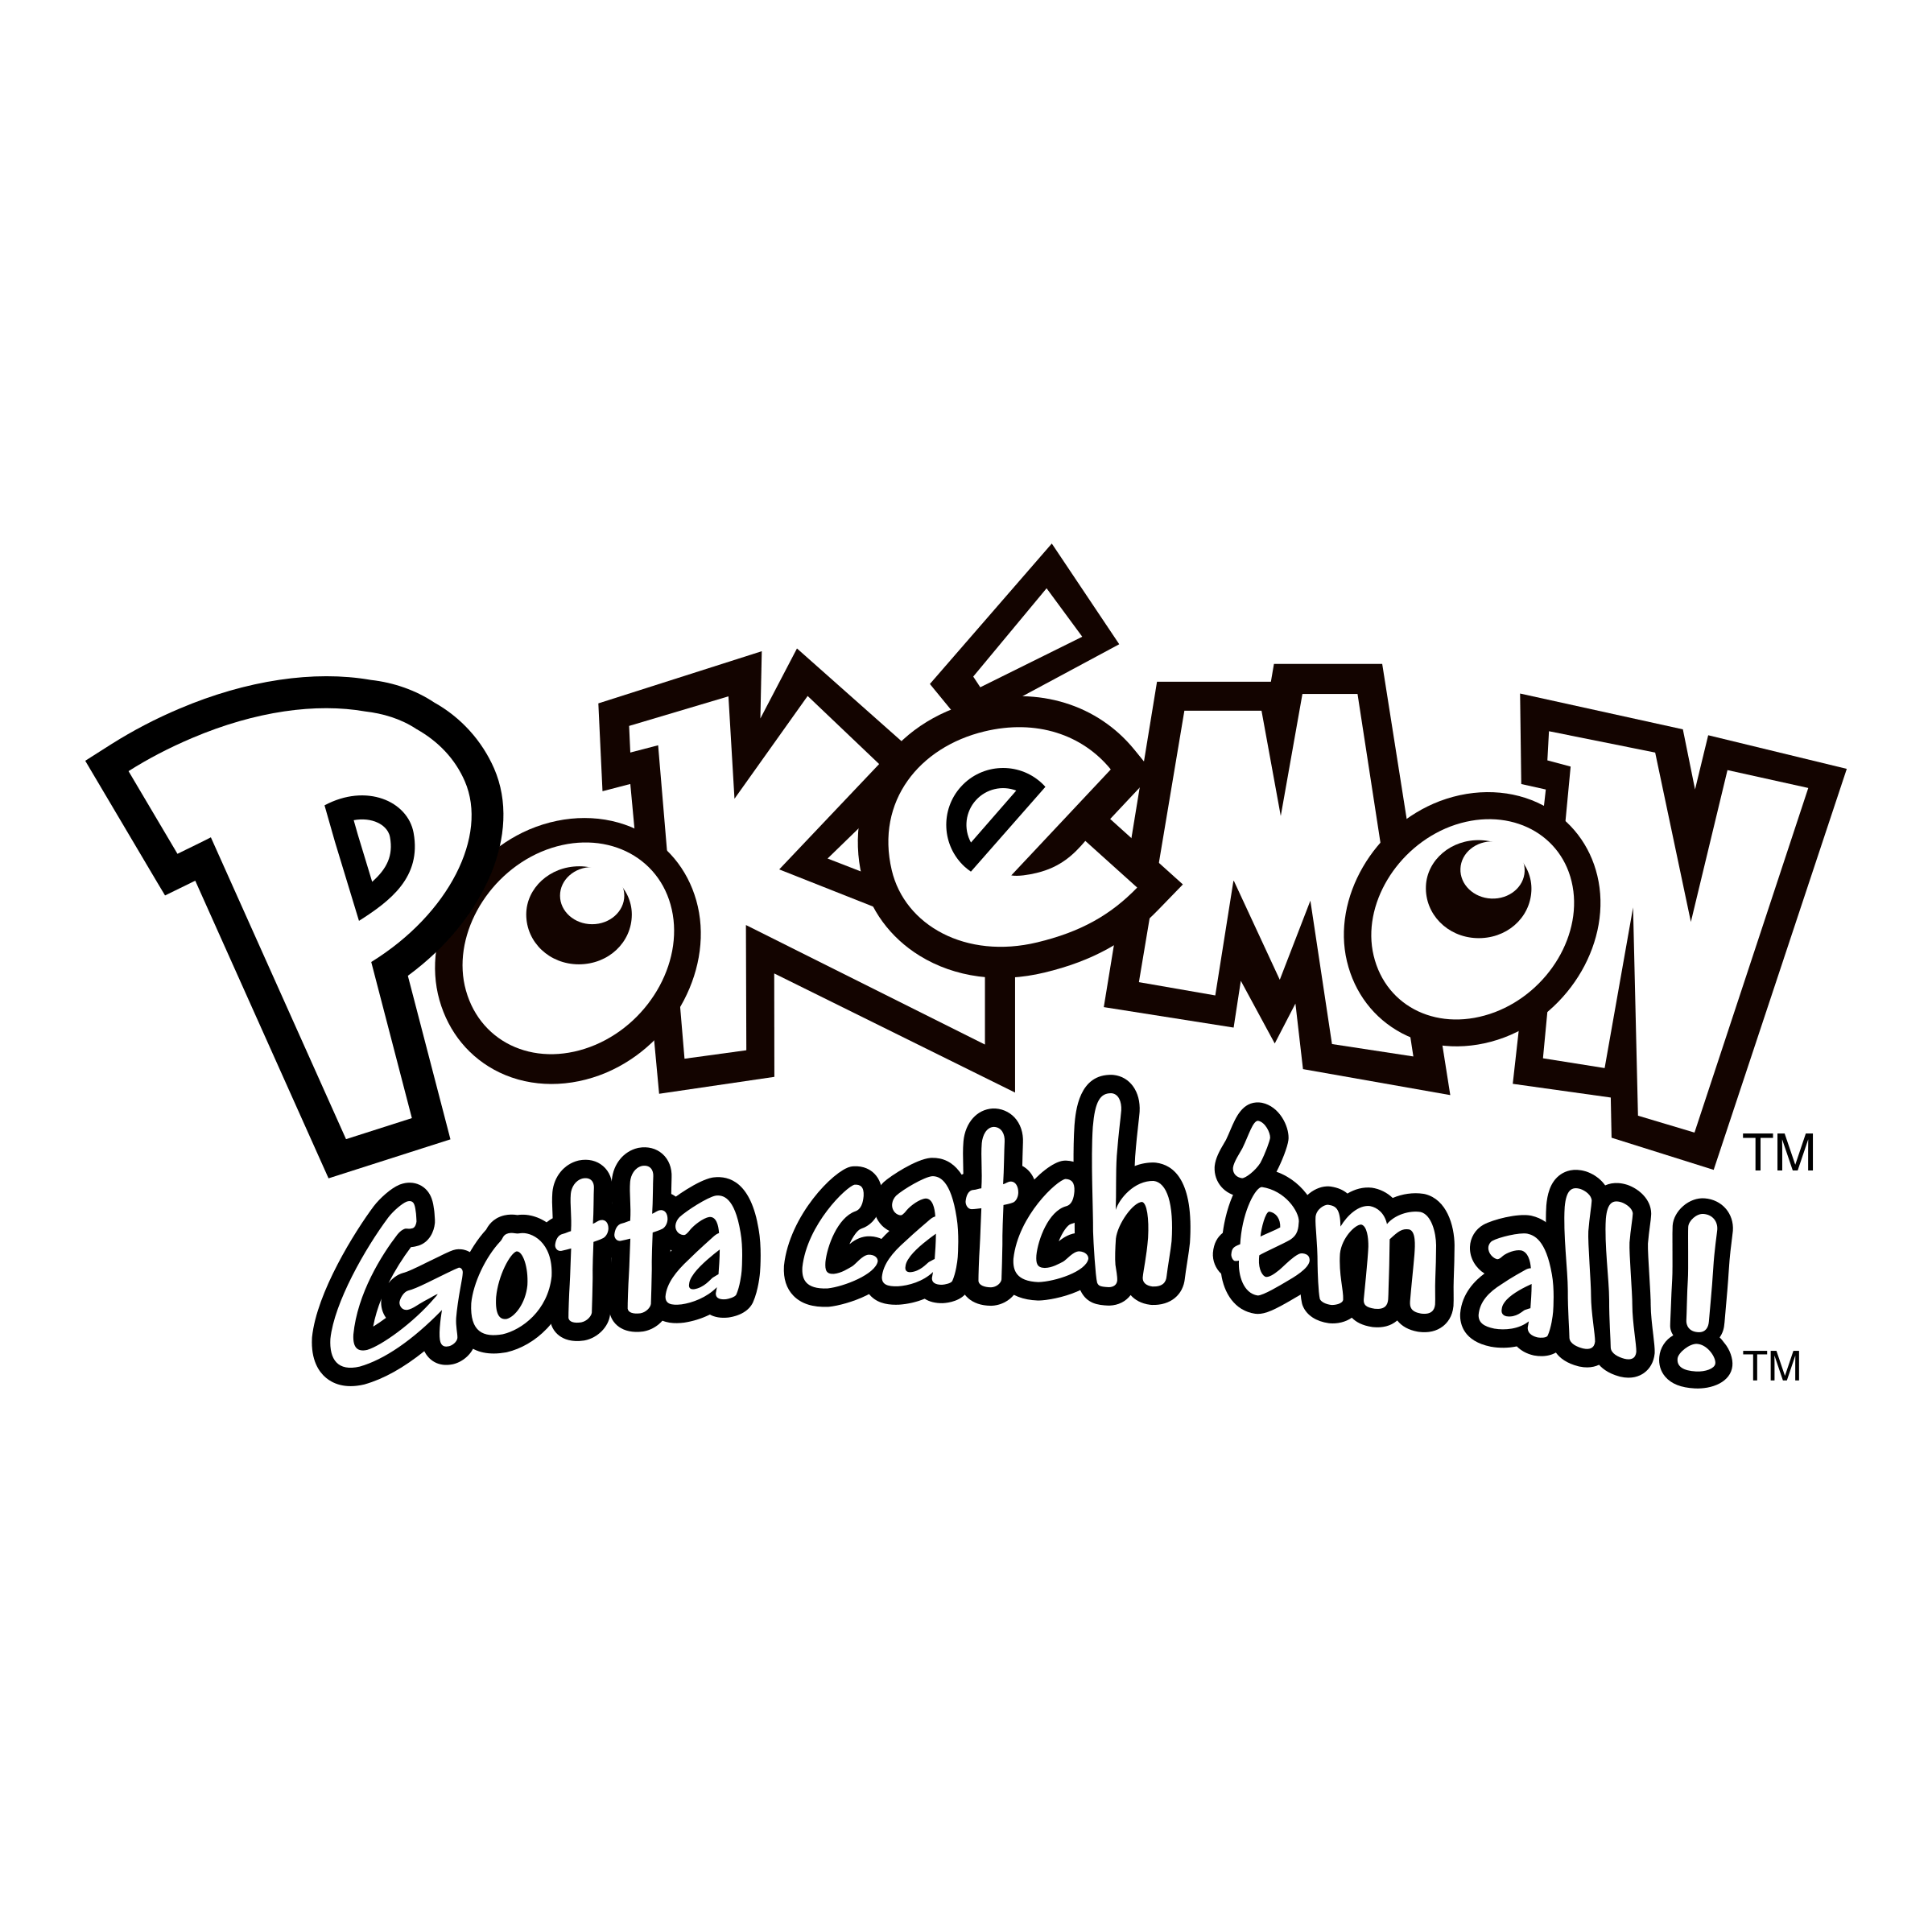 Pokeman Logo - Pokemon Logo PNG Transparent & SVG Vector - Freebie Supply